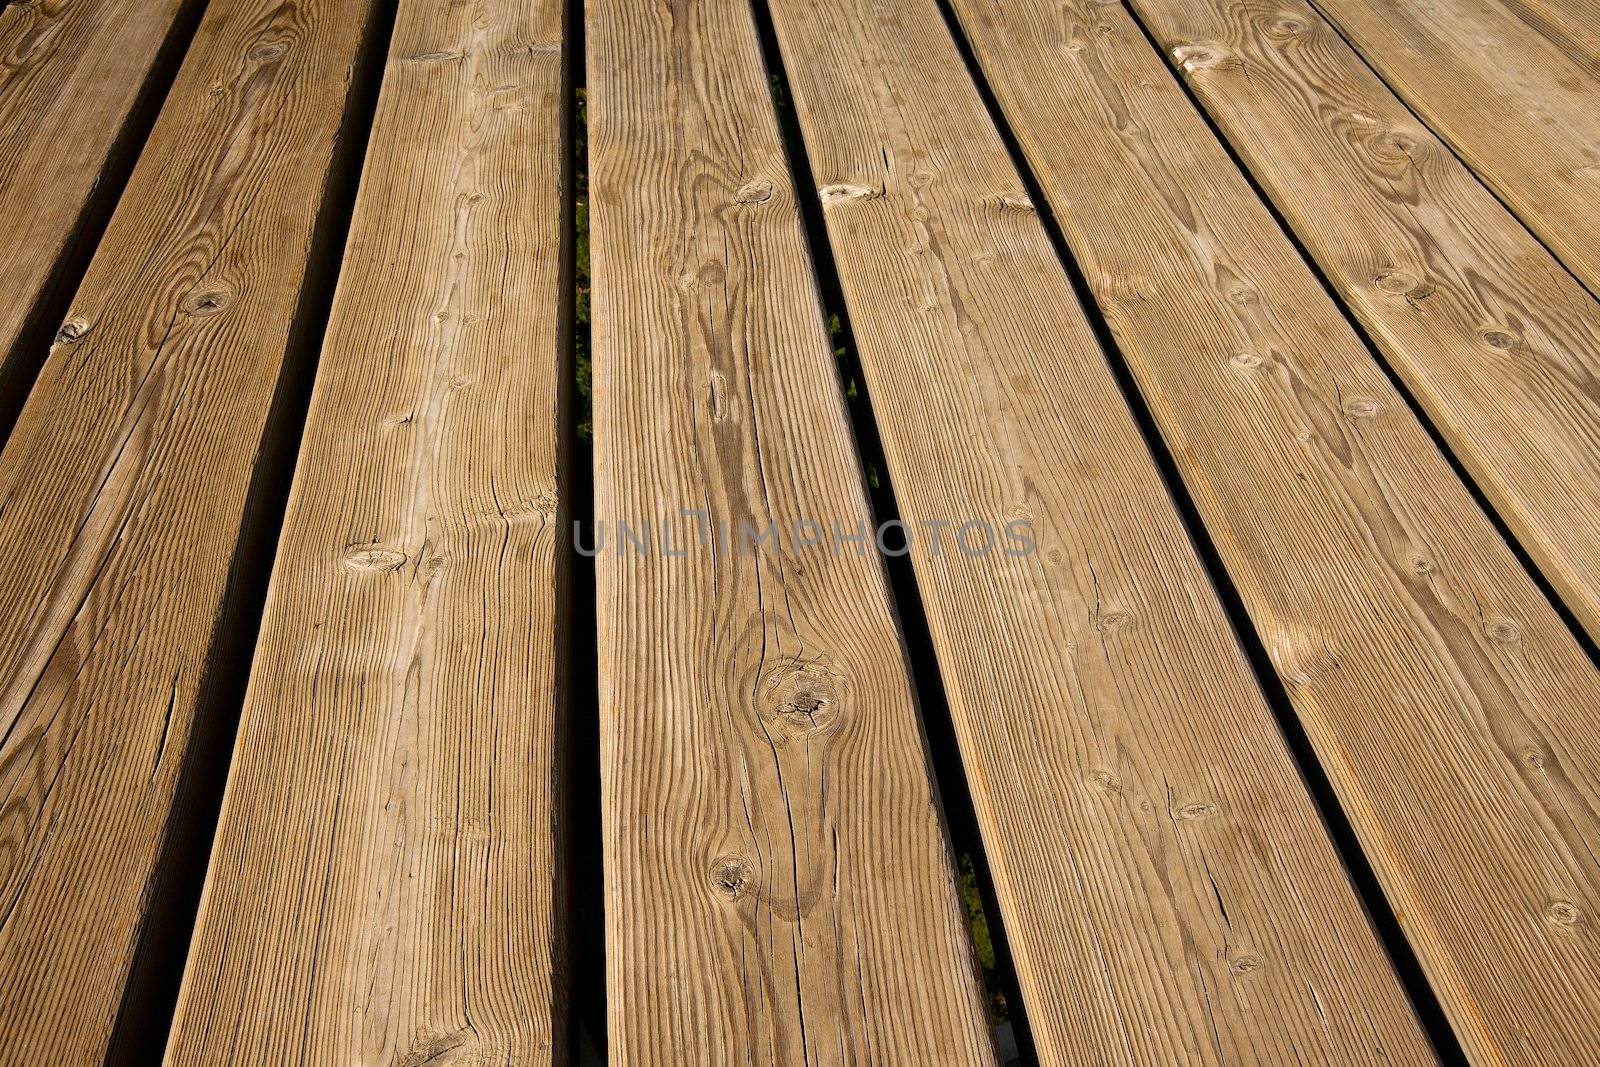 Wooden deck background lumber pattern